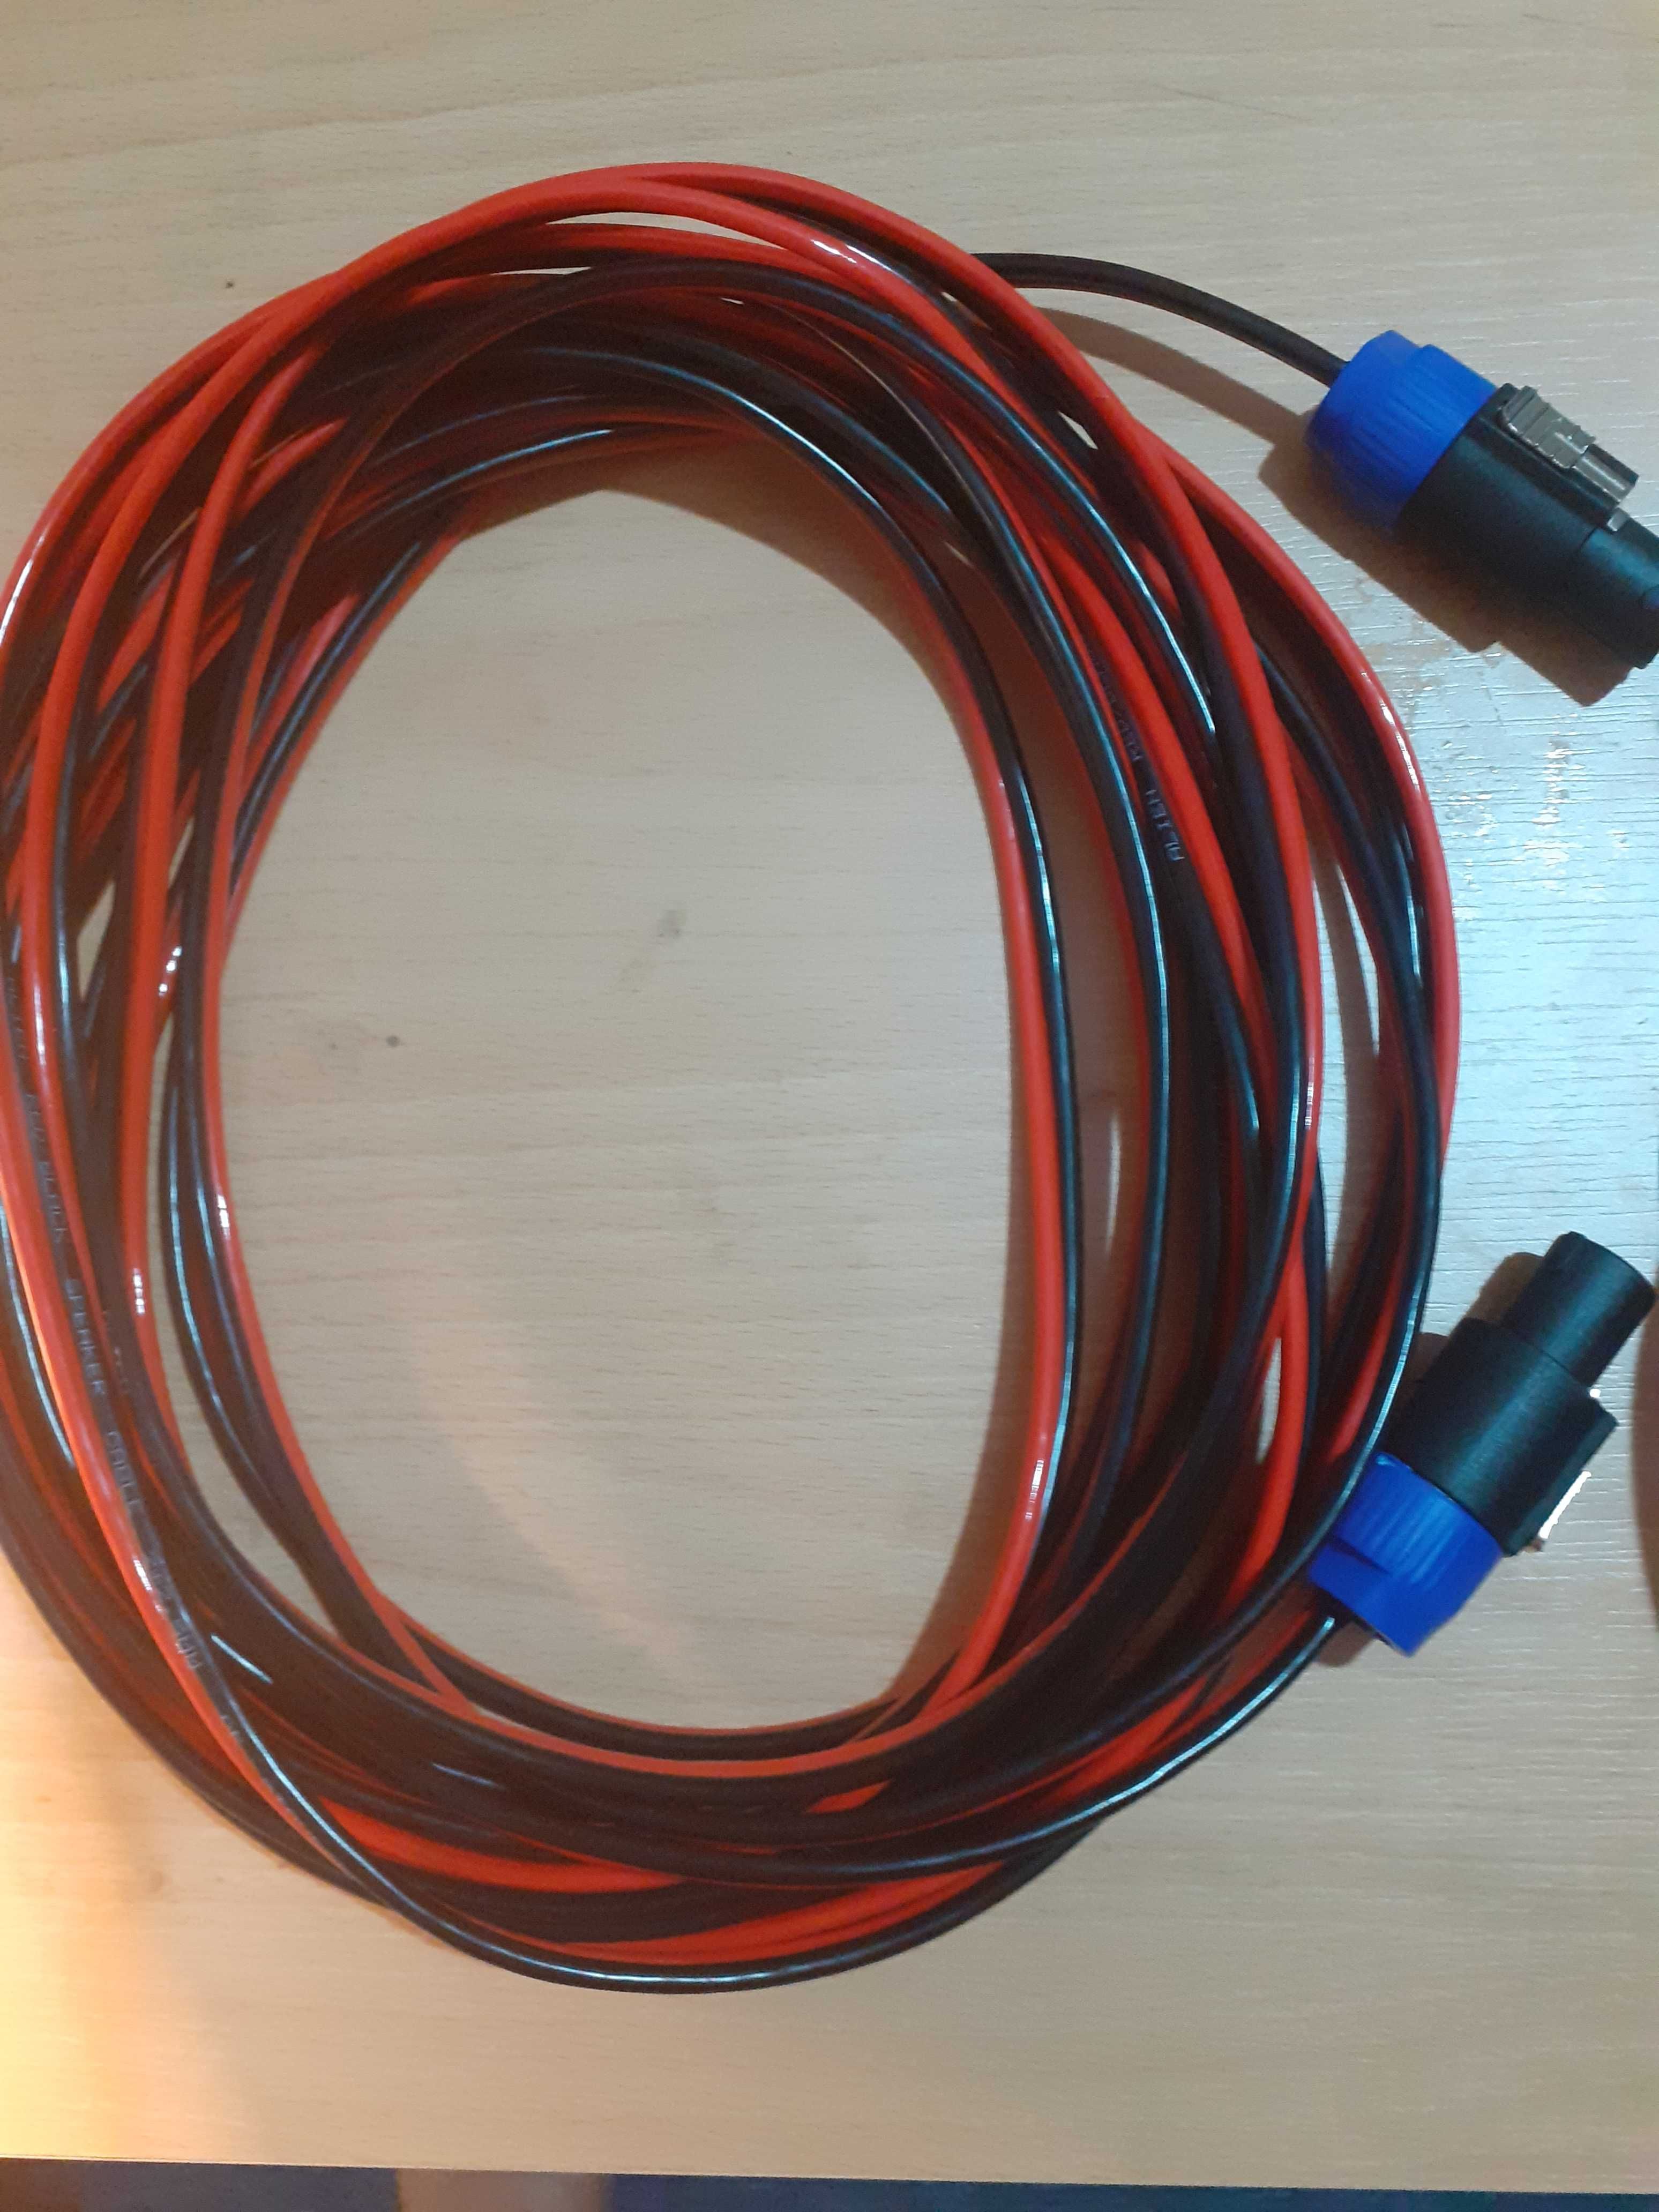 Cabluri noi foarte bune pentru boxe , orga , chitara